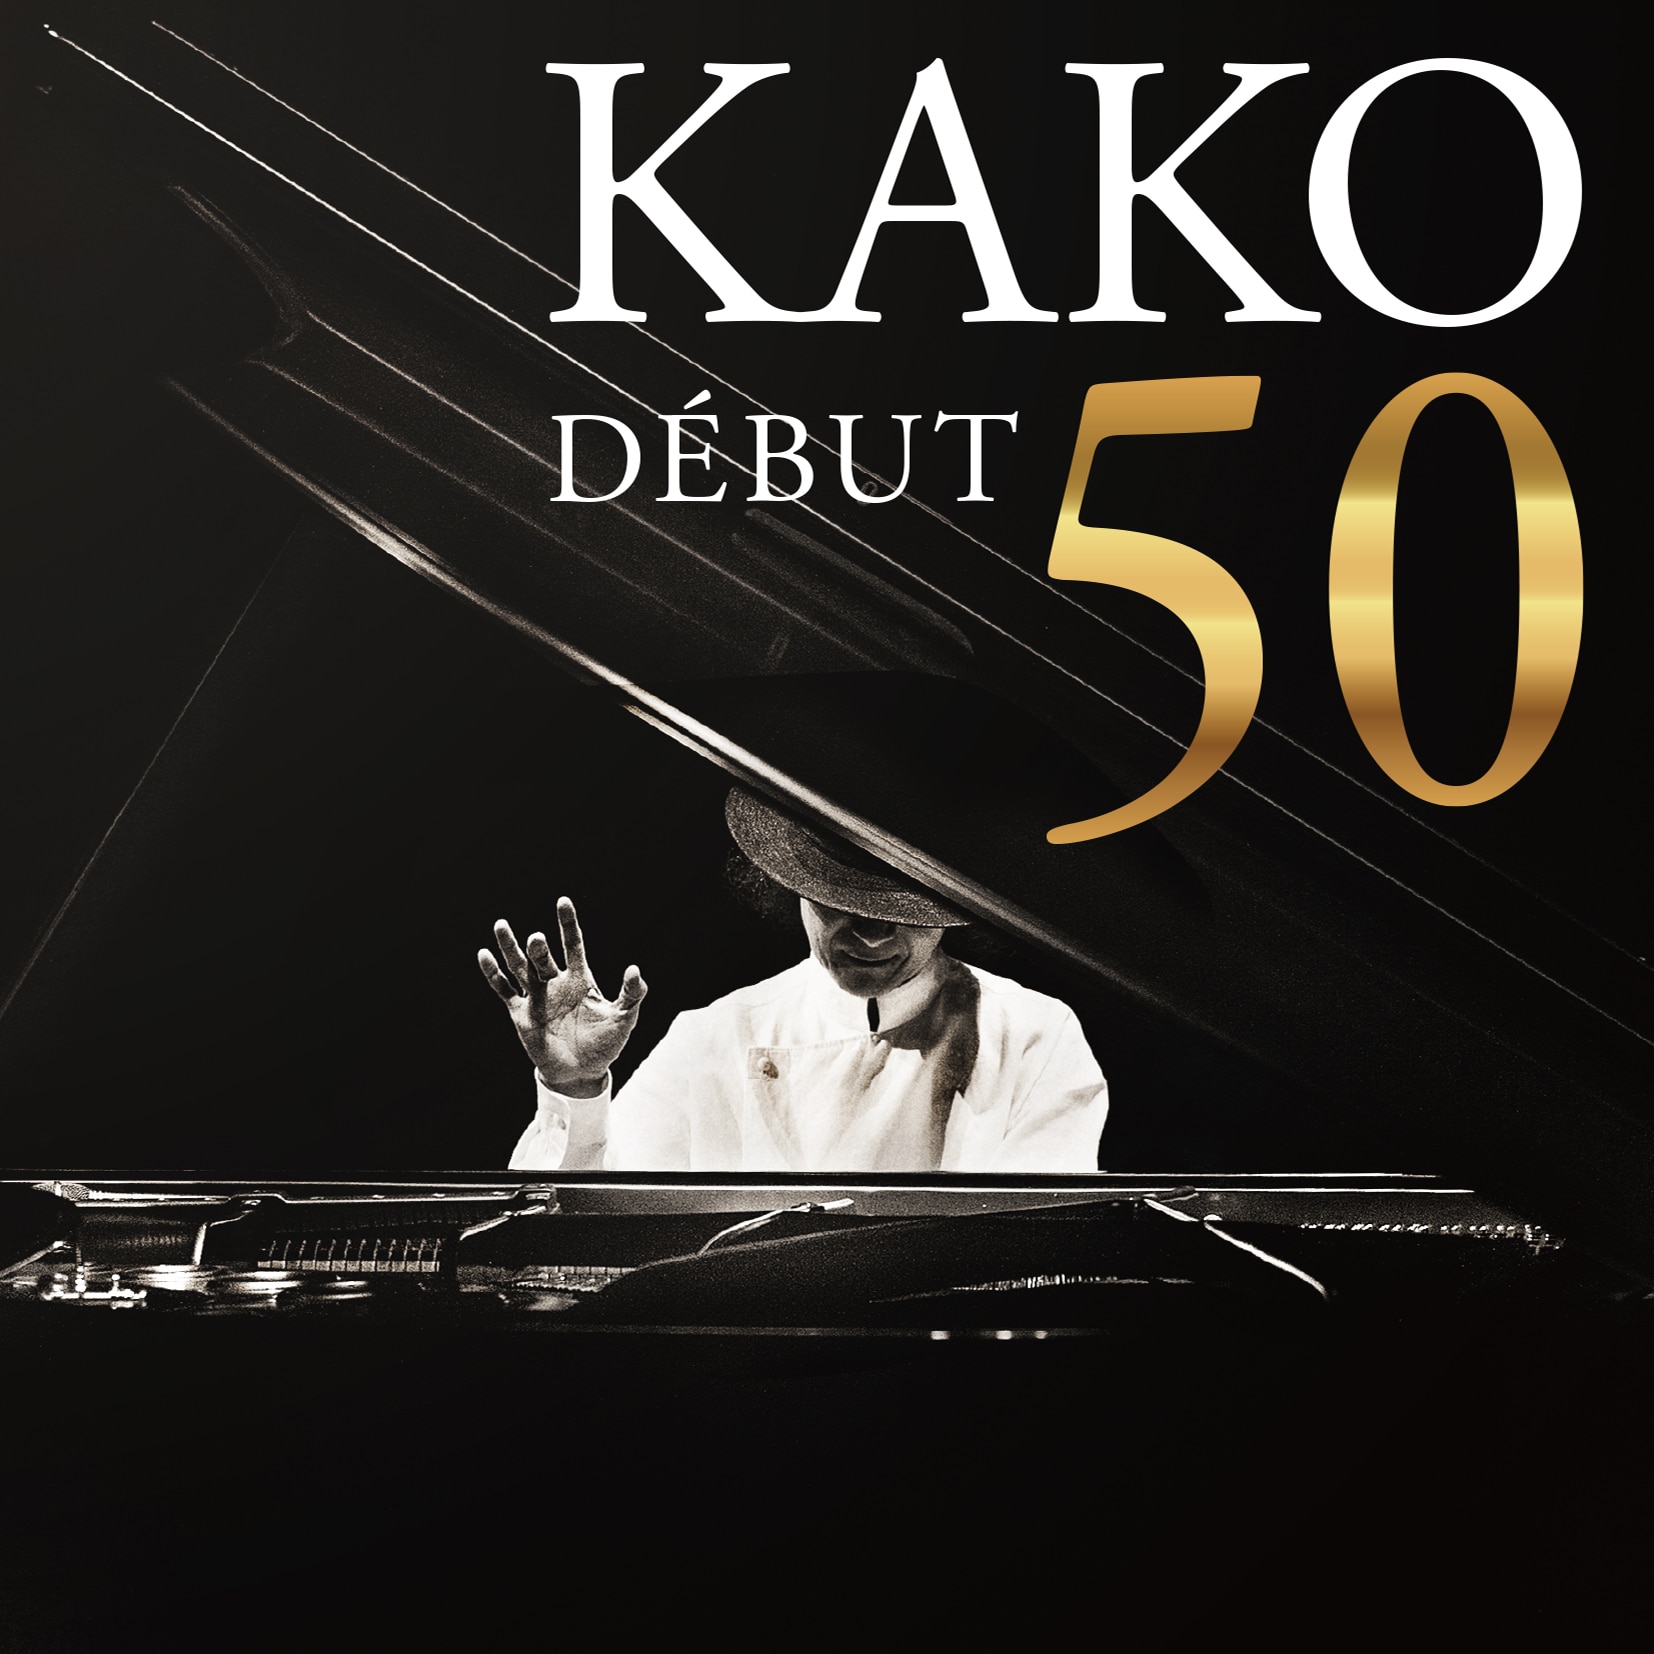 KAKO DEBUT 50 | エイベックス・ポータル - avex portal